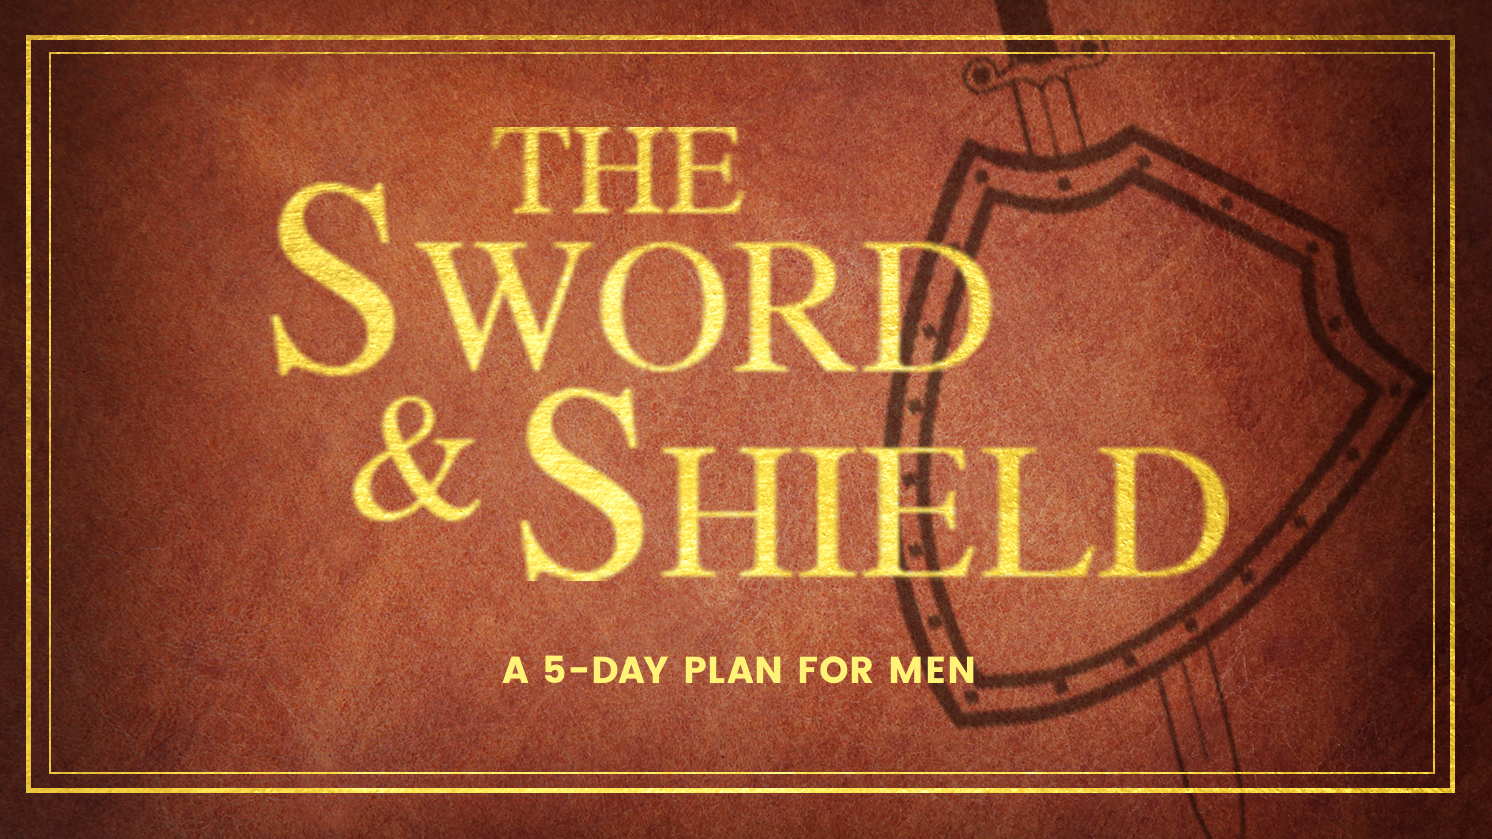 The Sword & Shield